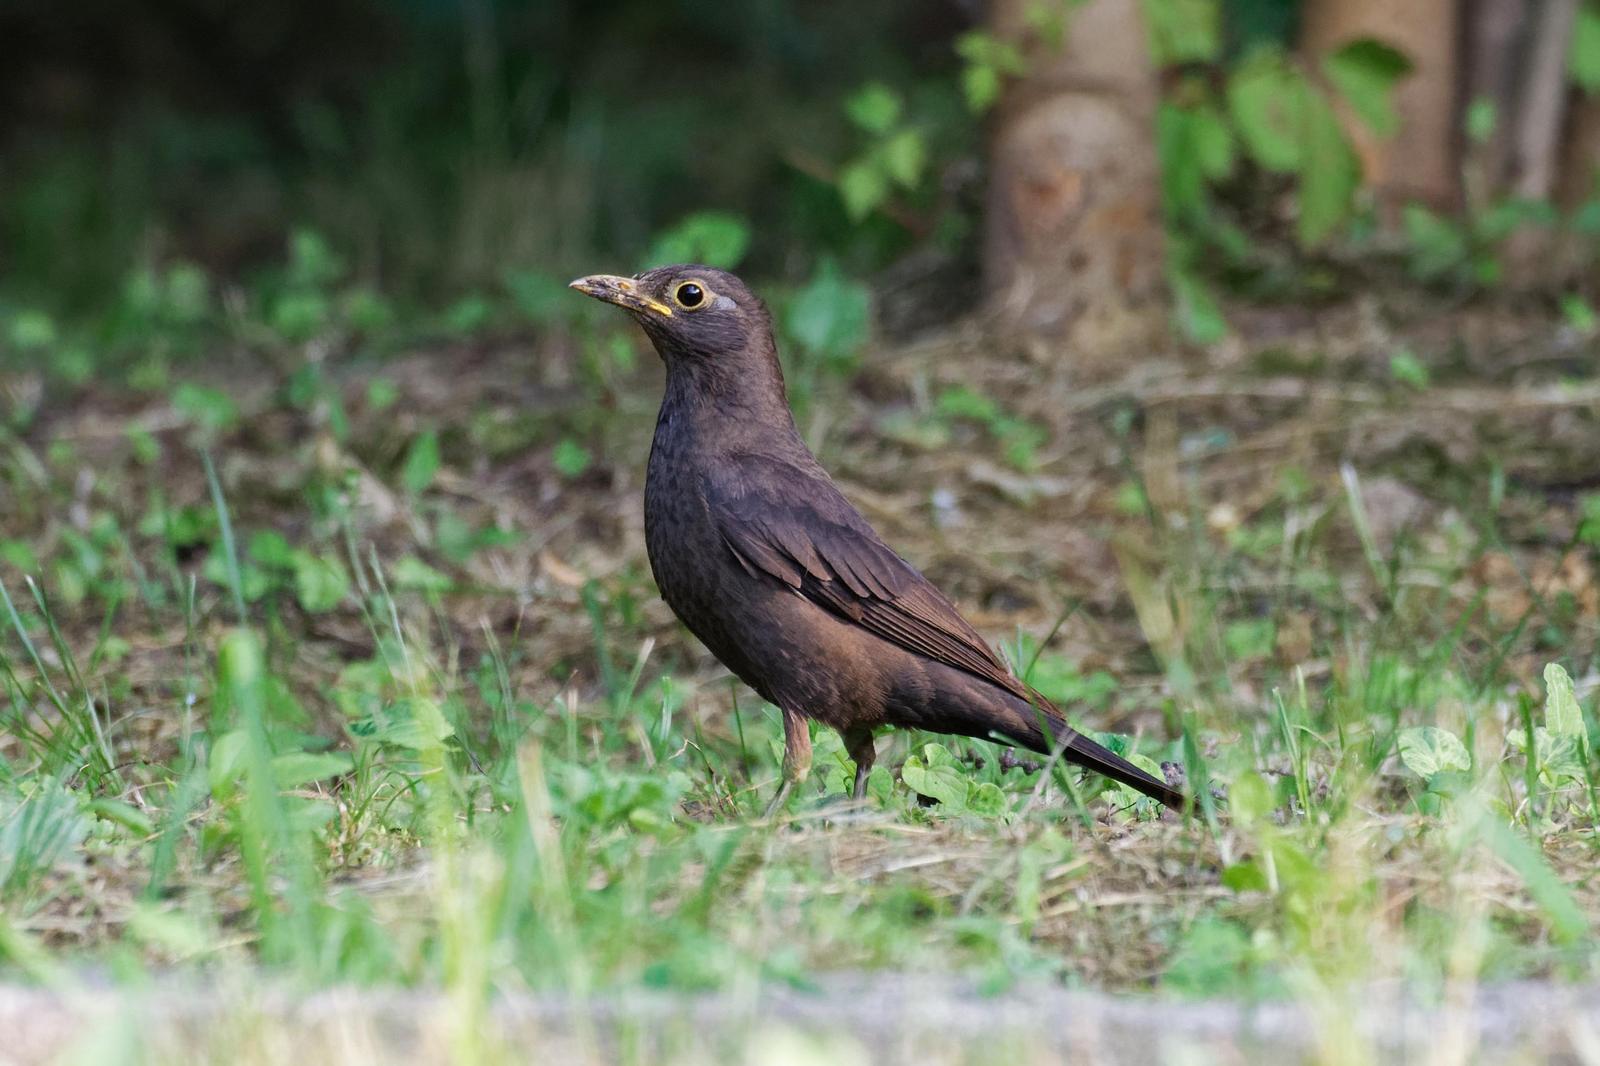 Chinese Blackbird Photo by Robert Cousins